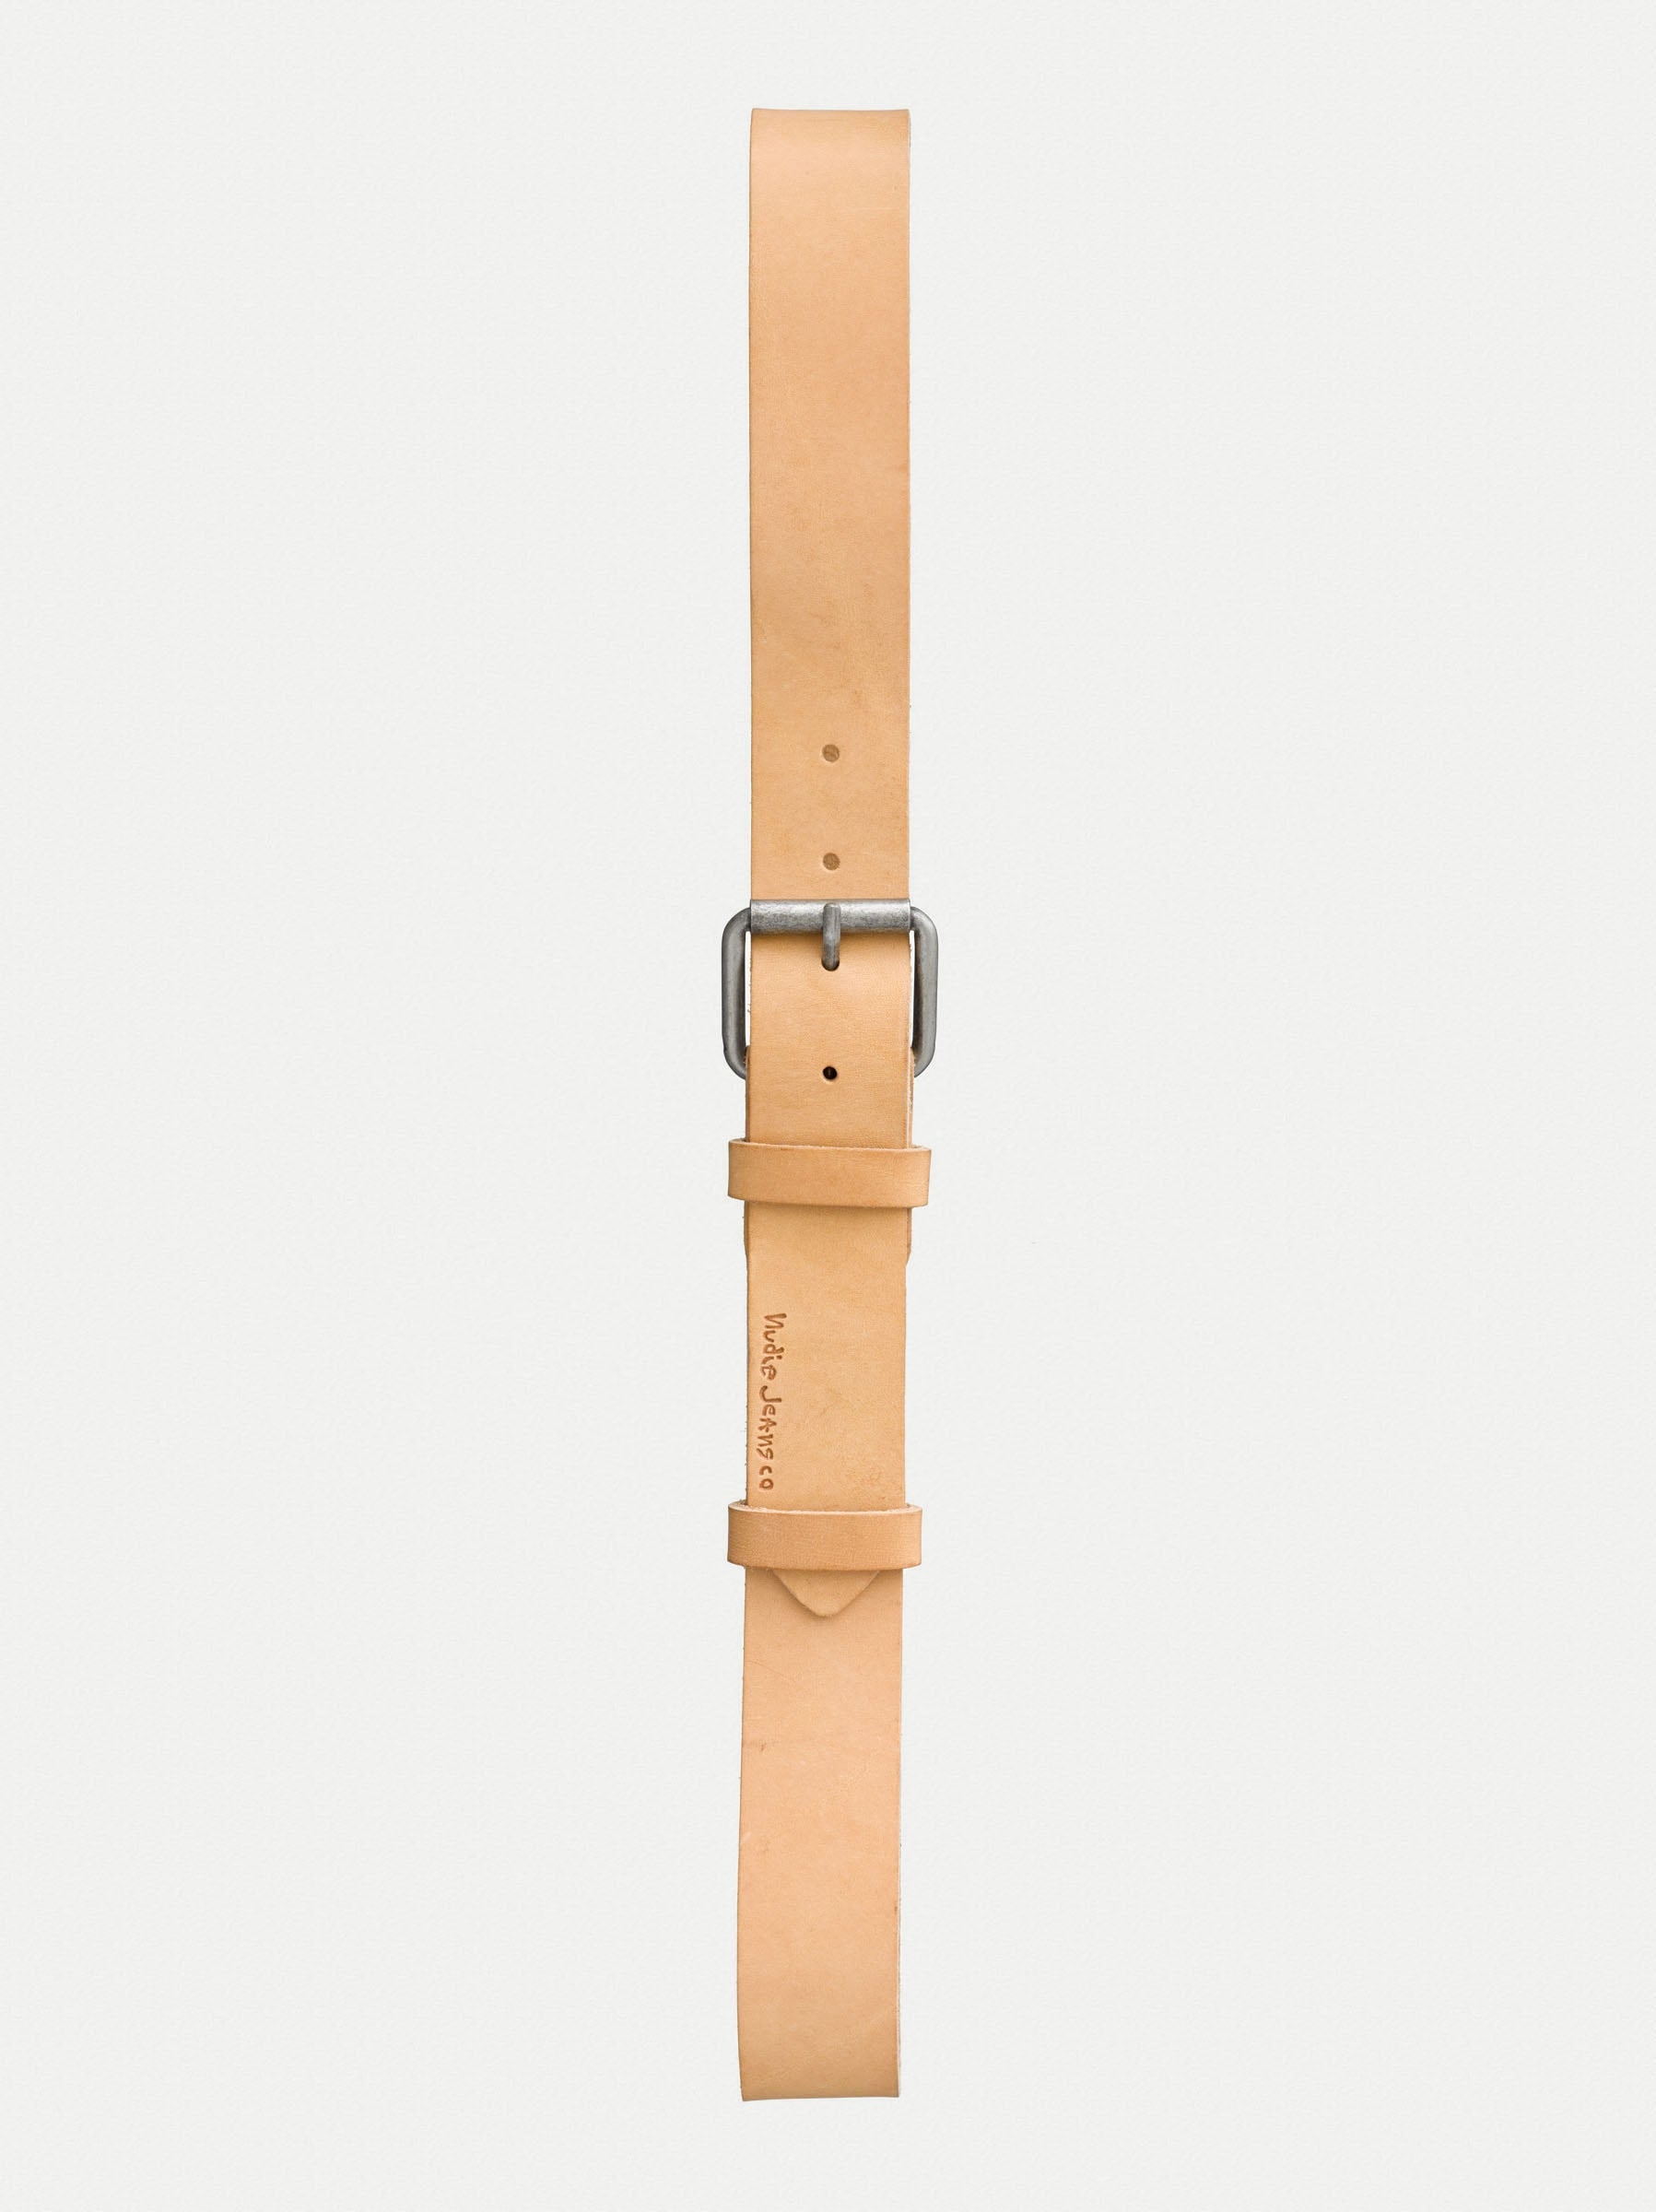 Nudie - Pedersson Leather Belt - Natural